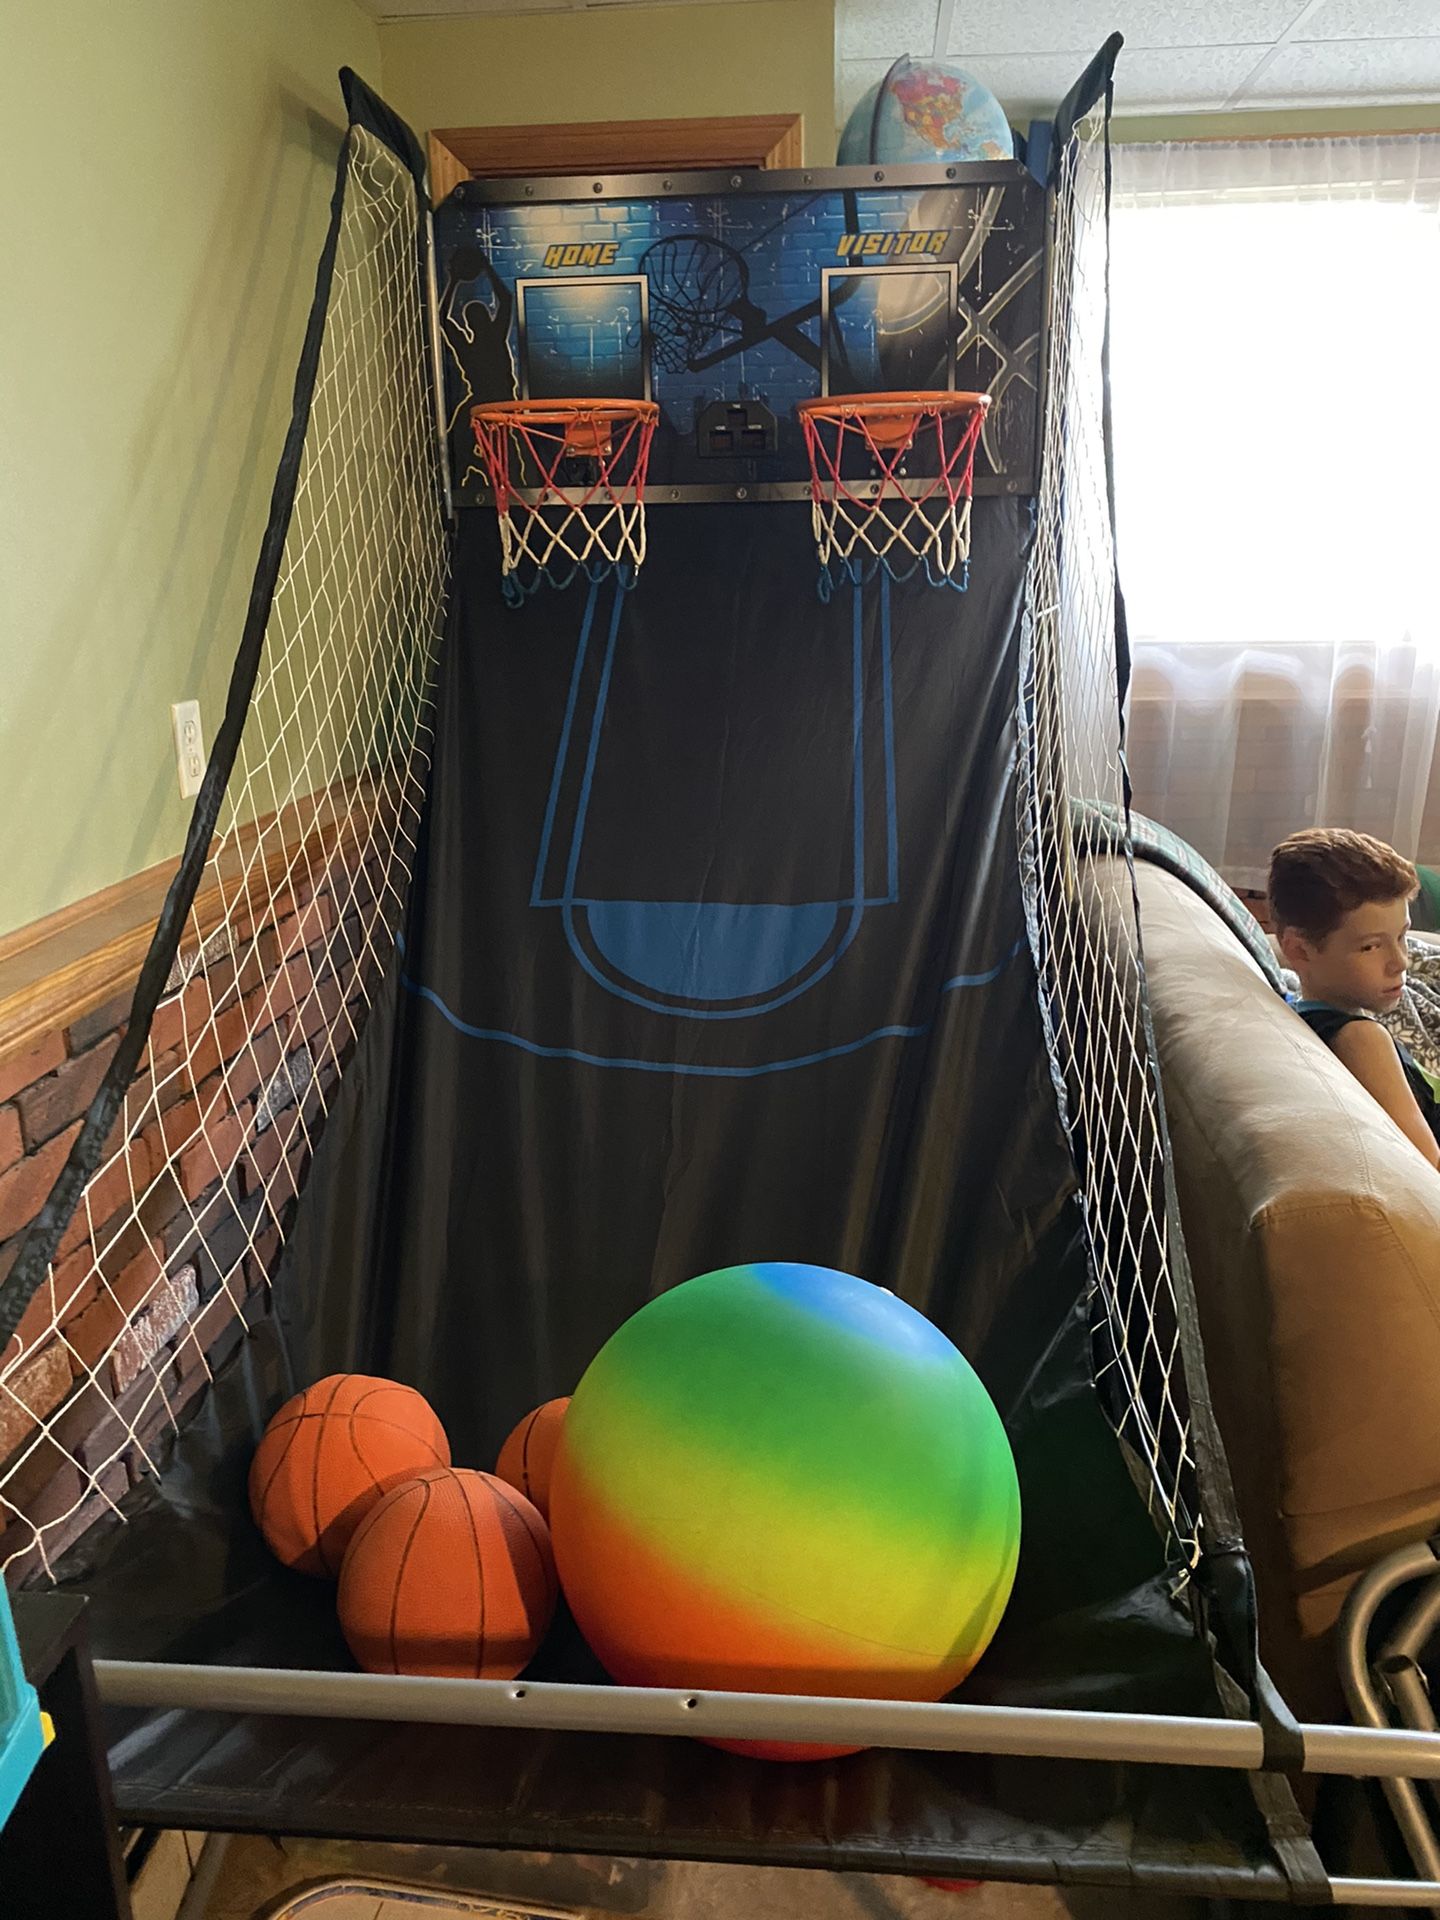 Arcade basketball Hoop With Electronic Score Keeping